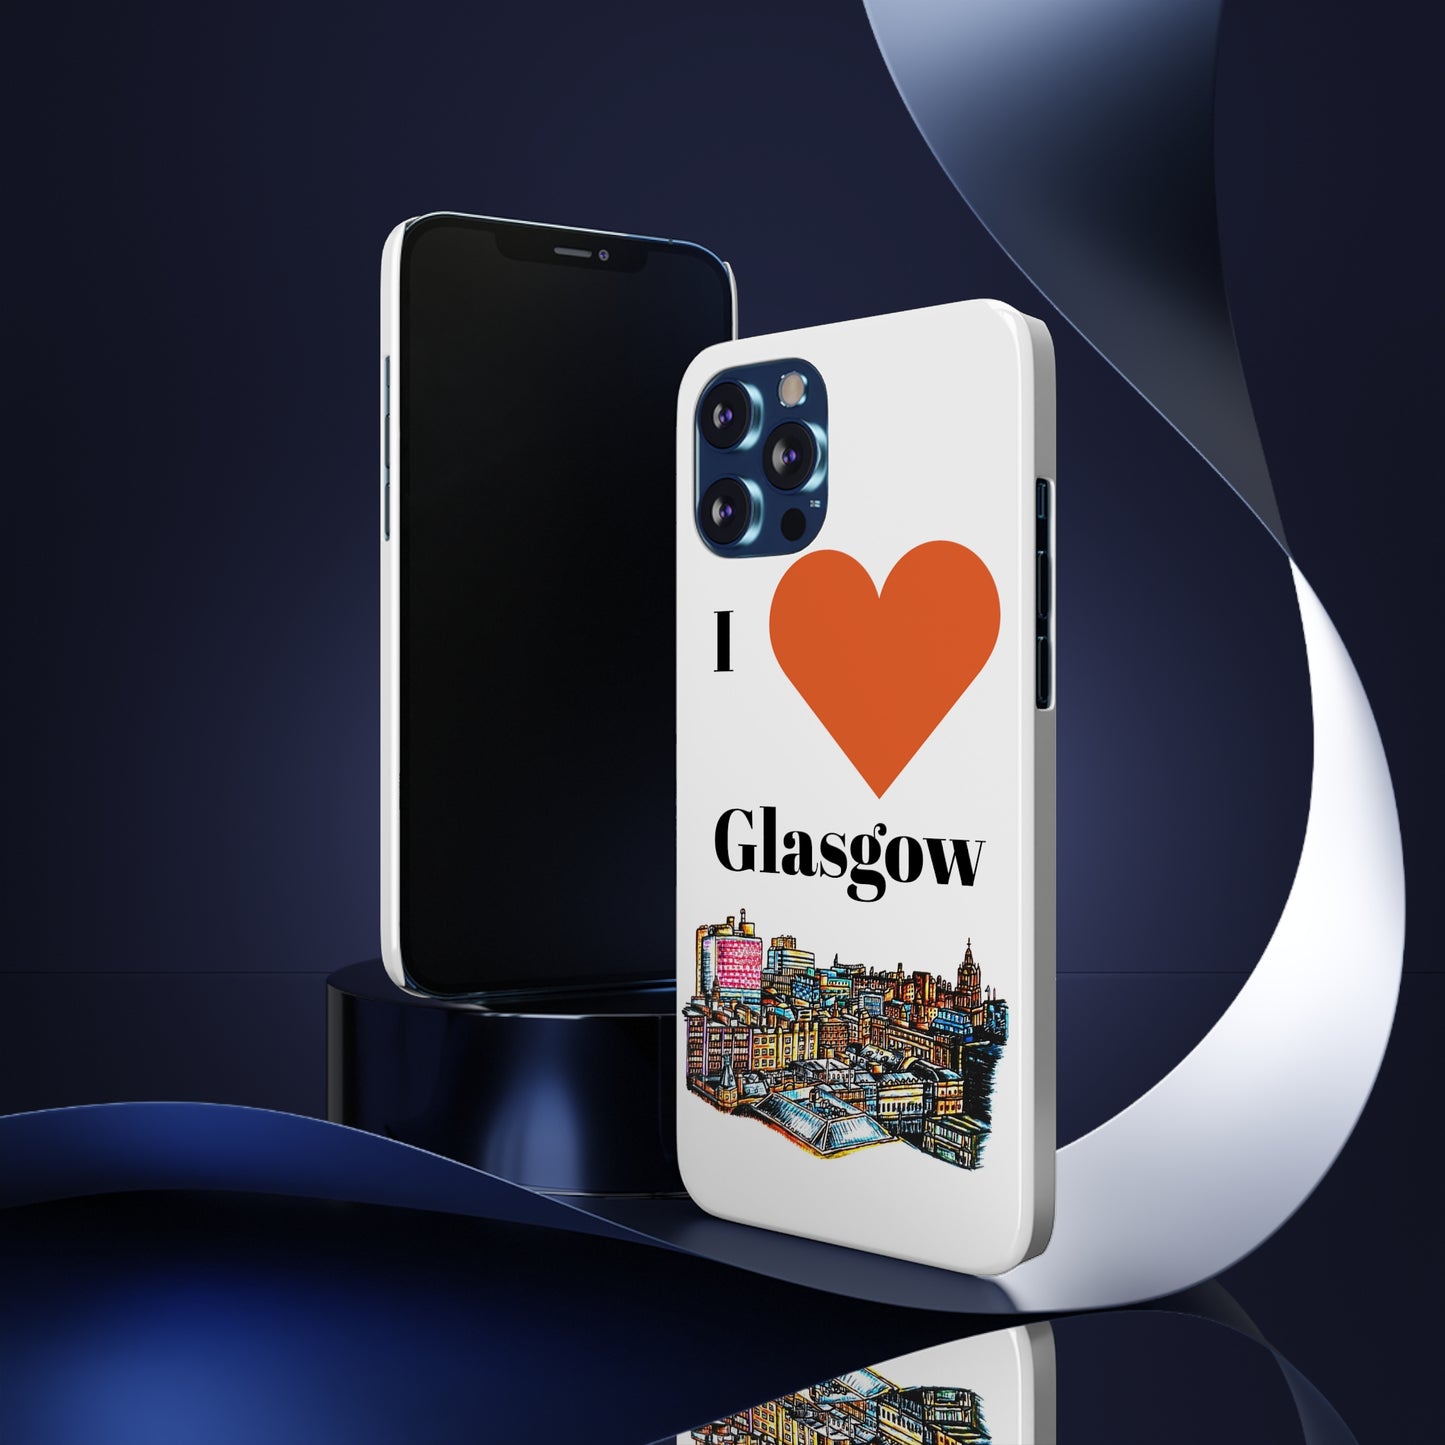 Slim Phone Case- I Love Glasgow Design